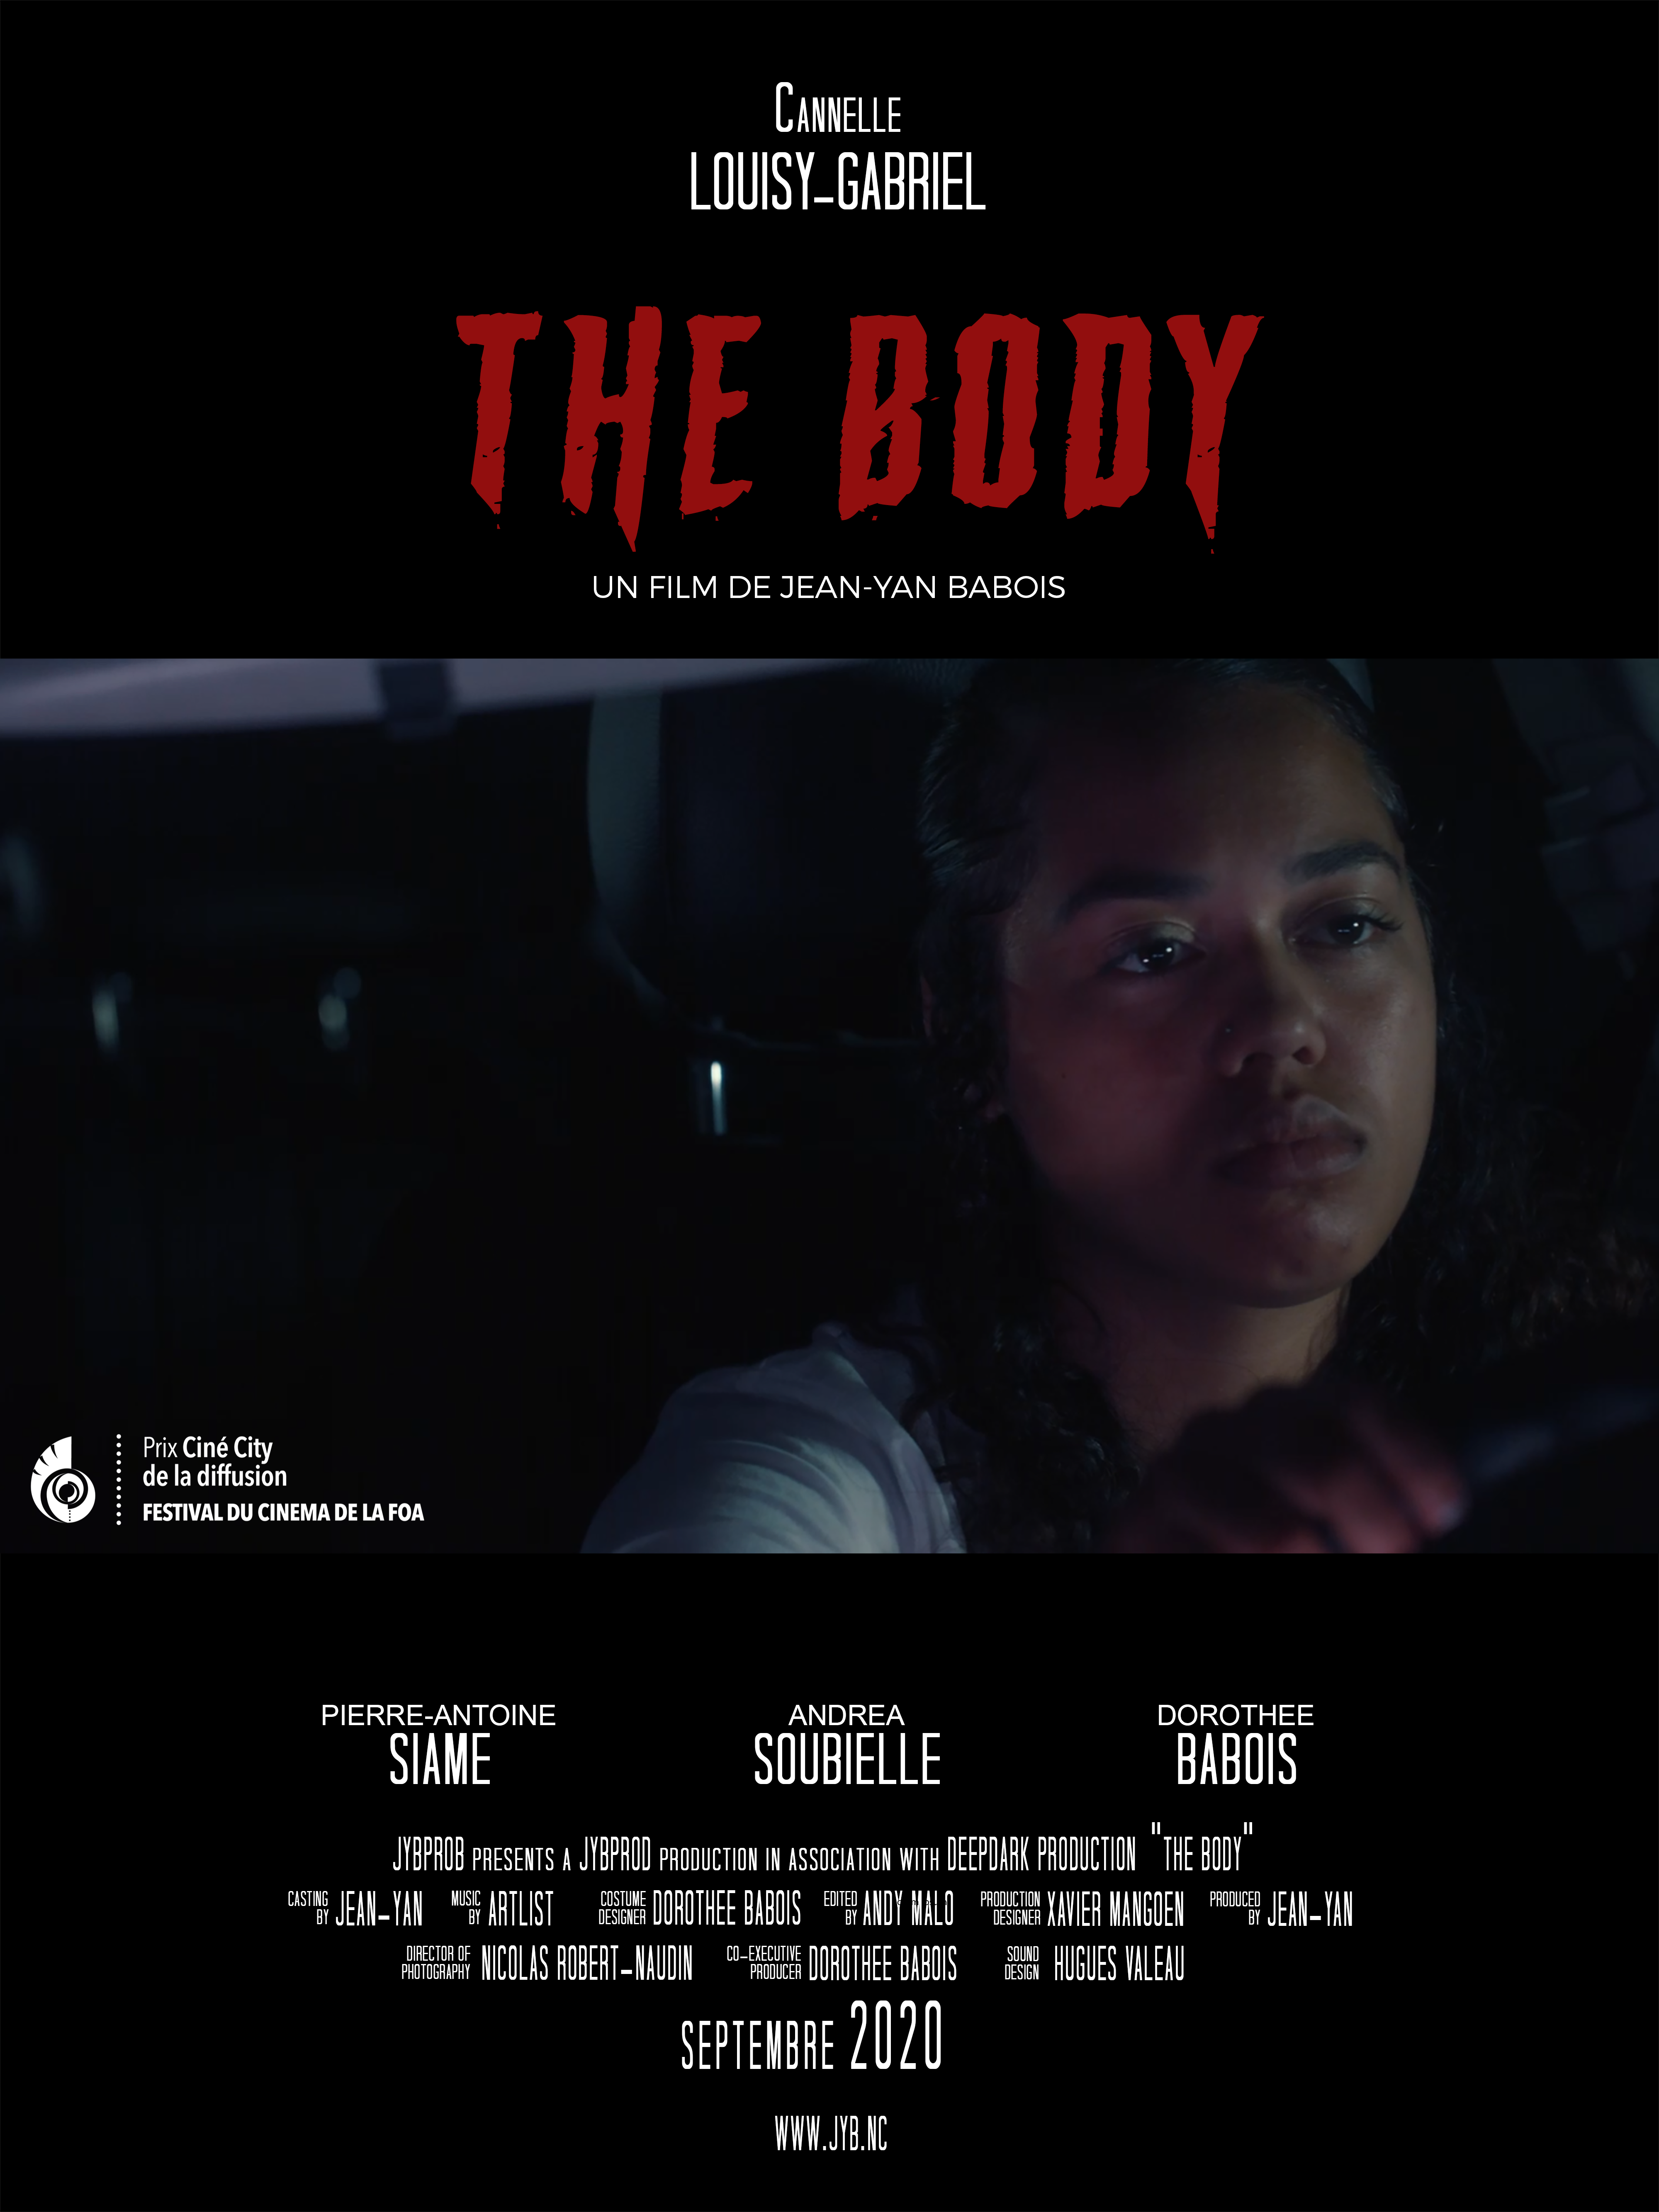 the body